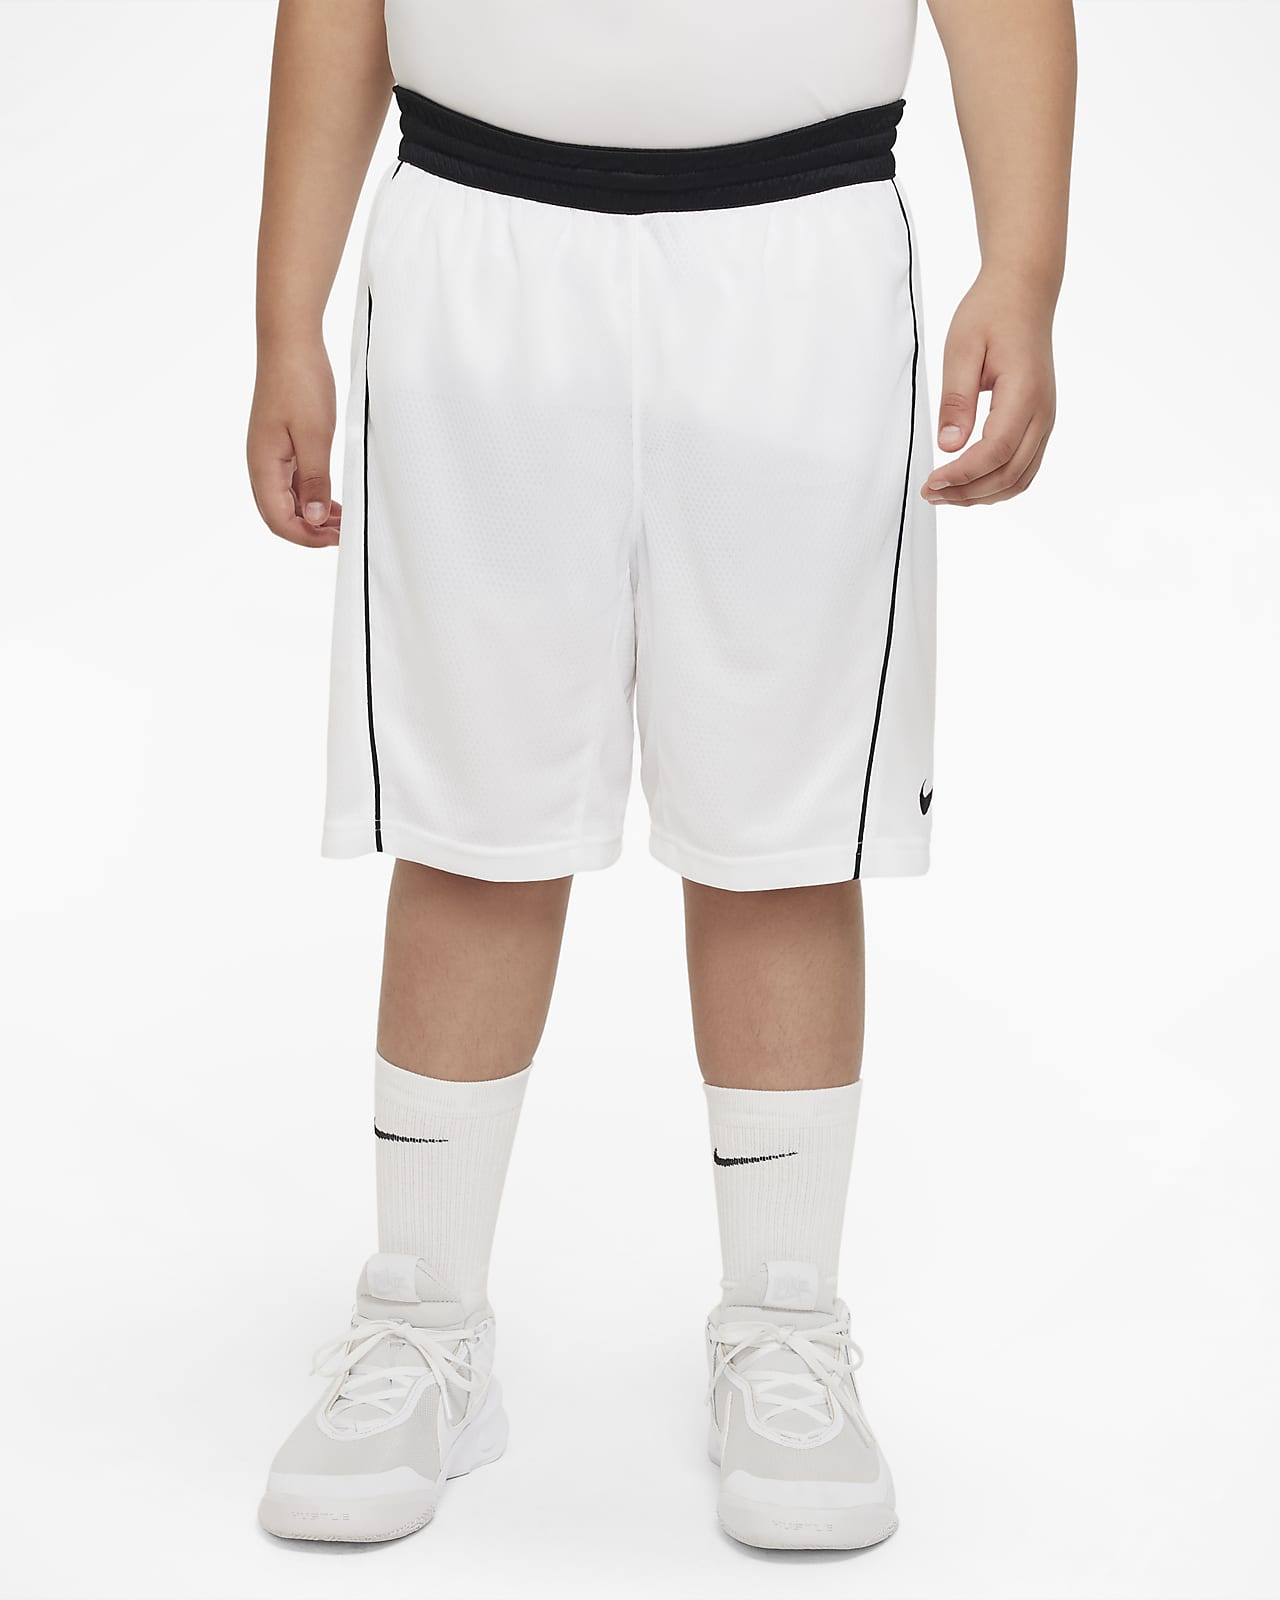 Shorts de básquetbol para niños talla grande (talla extendida) Nike Dri-FIT